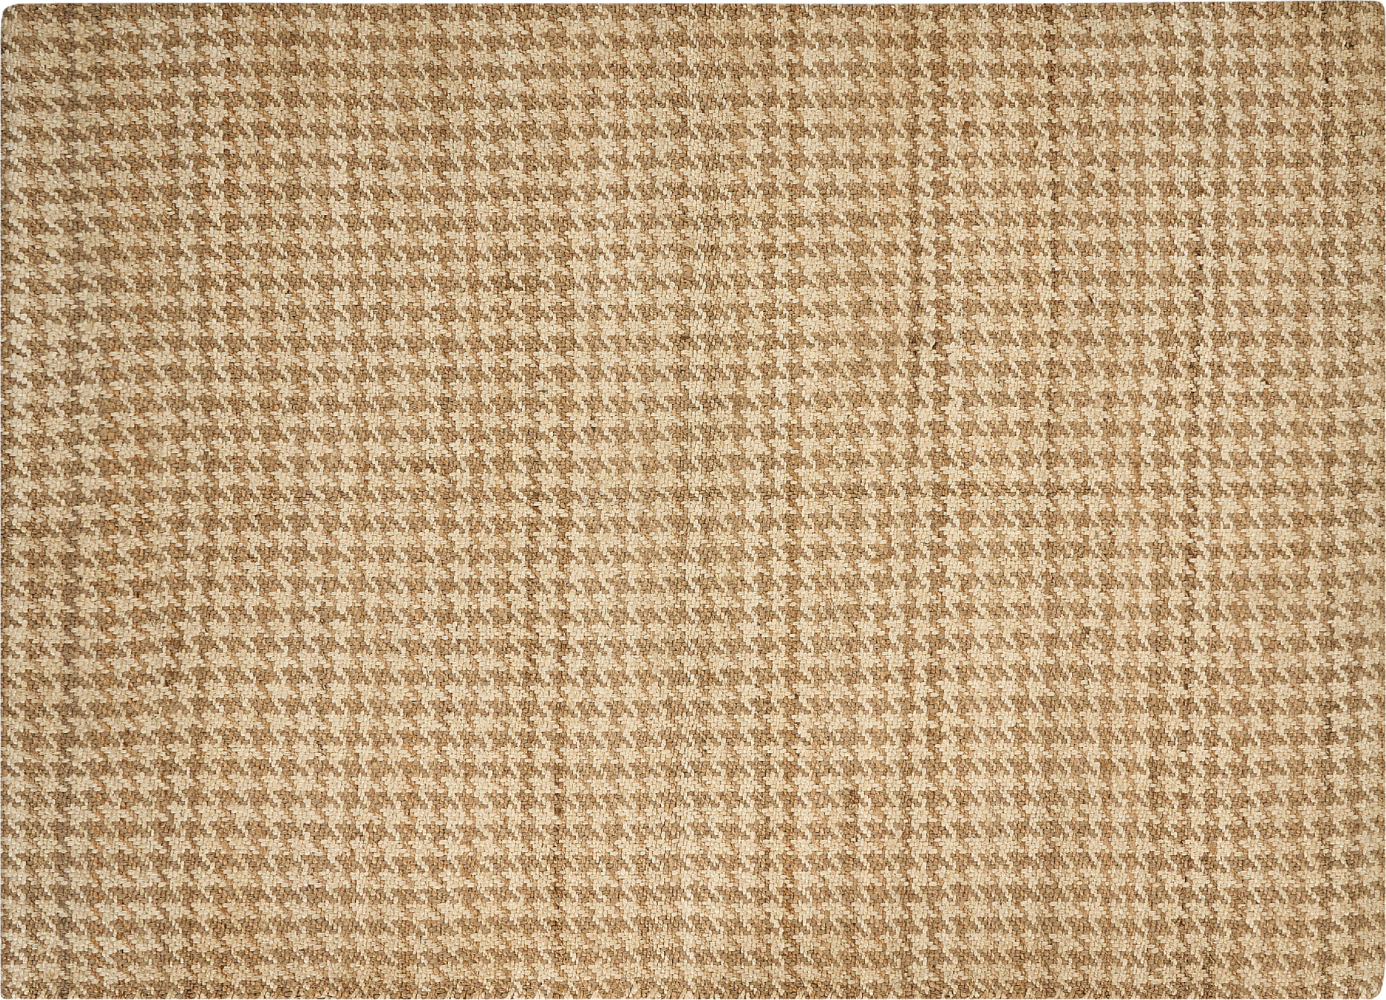 Teppich Jute beige 160 x 230 cm kariertes Muster Kurzflor ARAPTEPE Bild 1